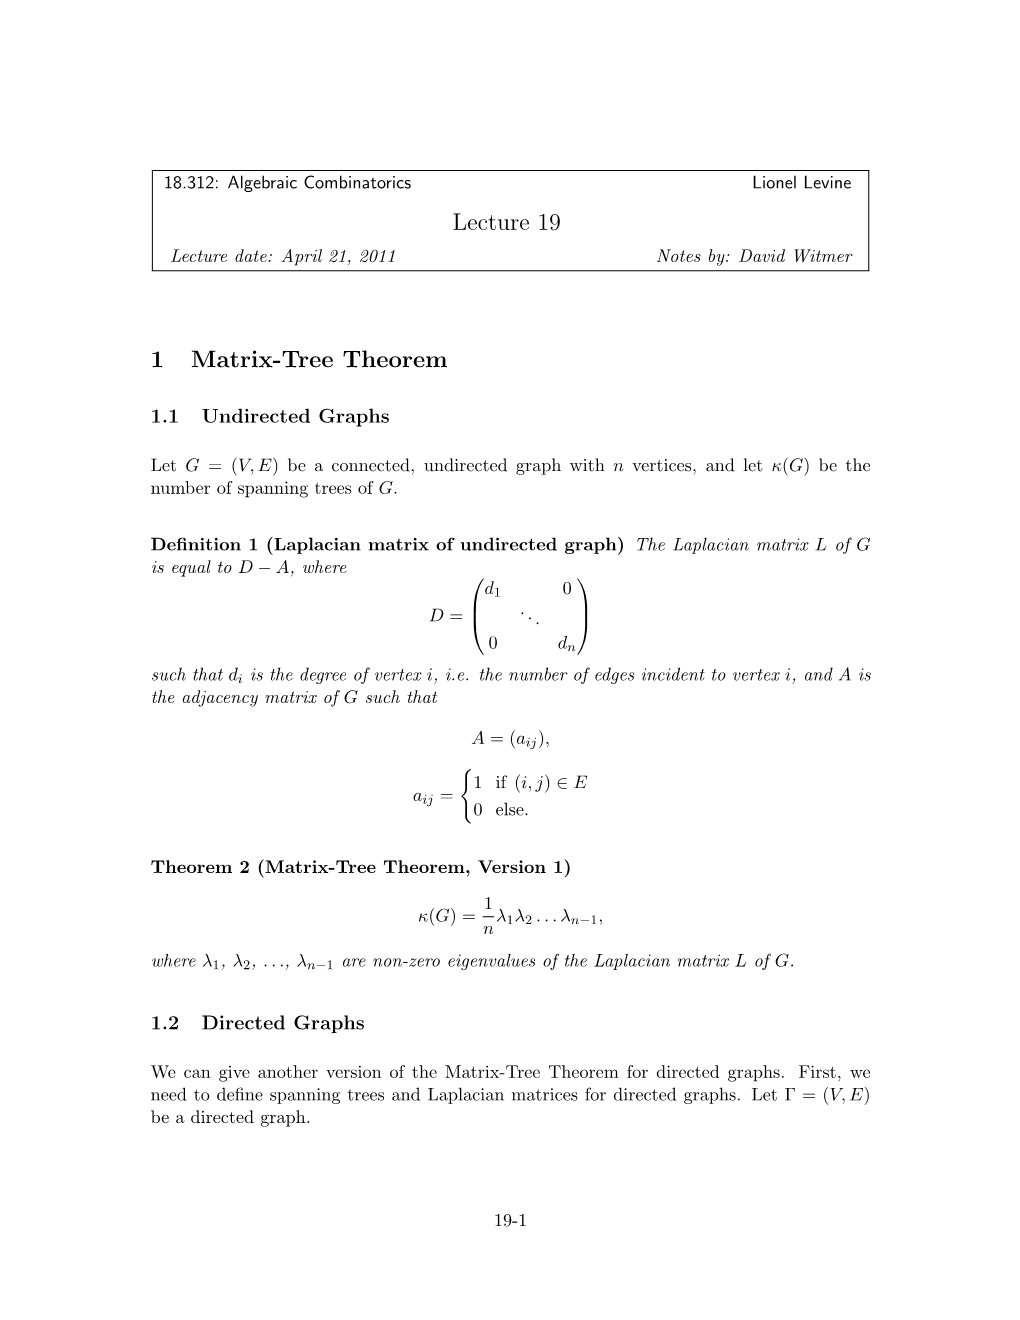 Lecture 19 1 Matrix-Tree Theorem